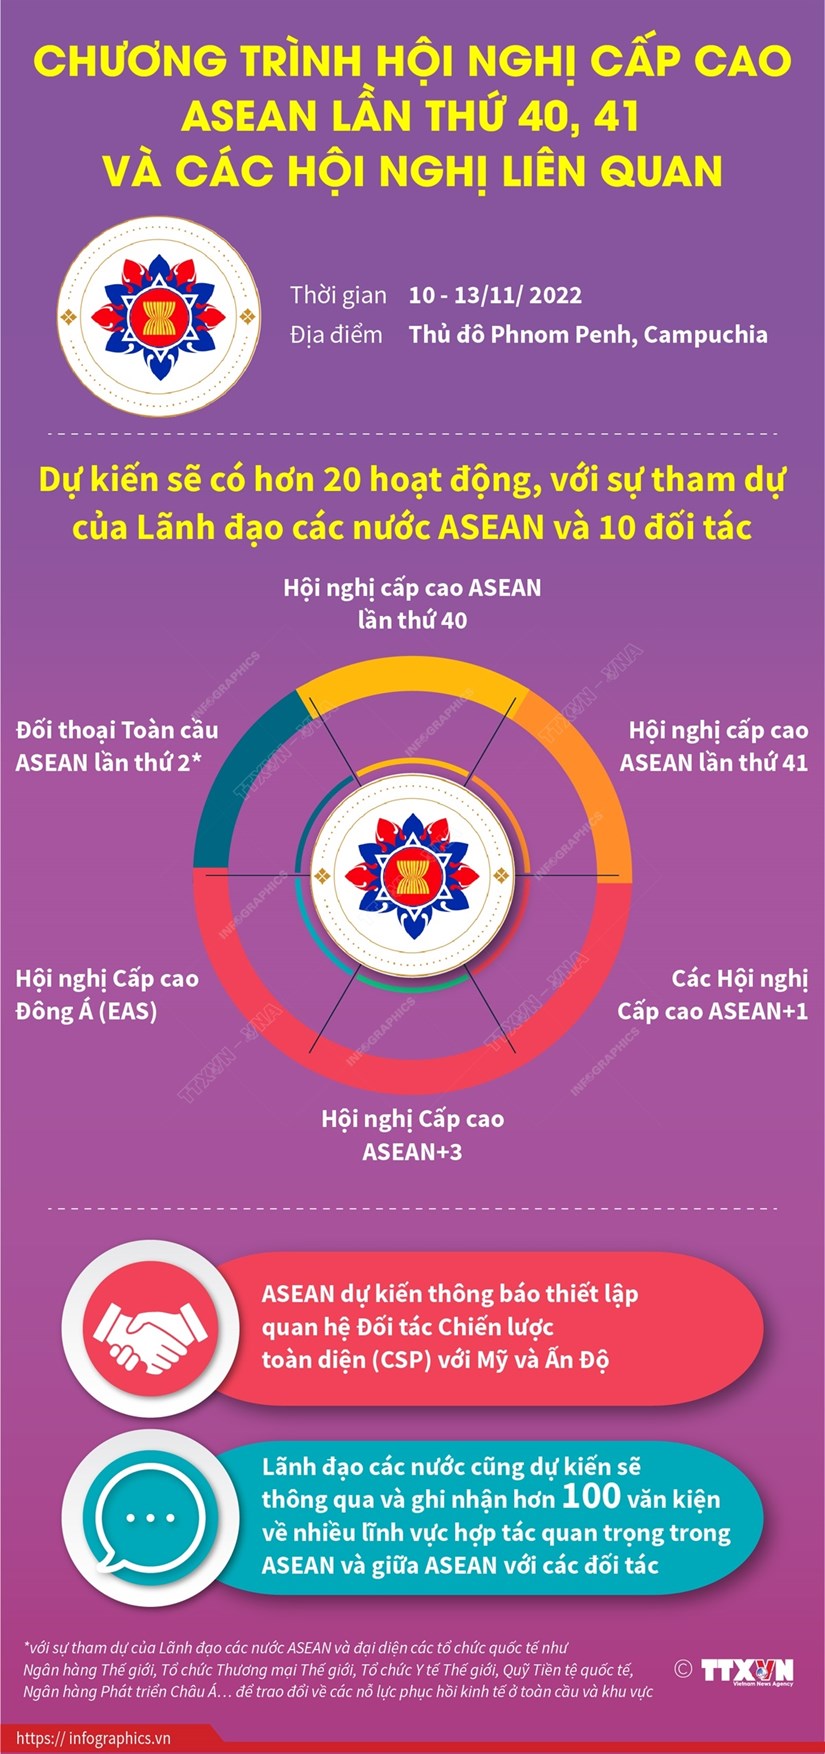 Hoi nghi cap cao ASEAN lan thu 40, 41 va cac hoi nghi lien quan hinh anh 1